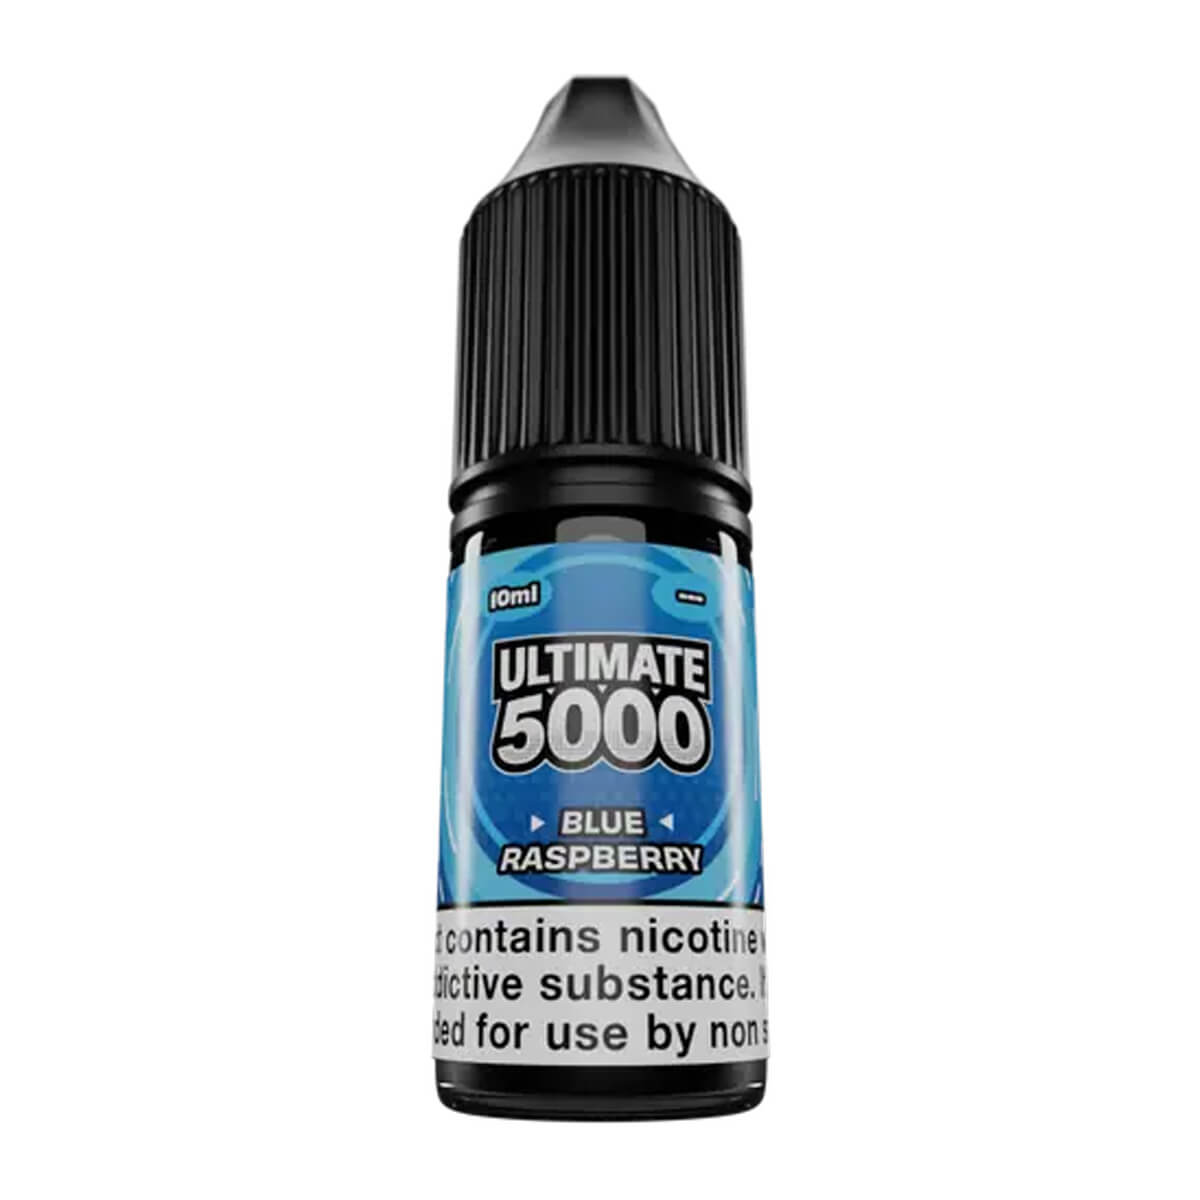 Blue Raspberry Nic Salt E-Liquid by Ultimate 5000